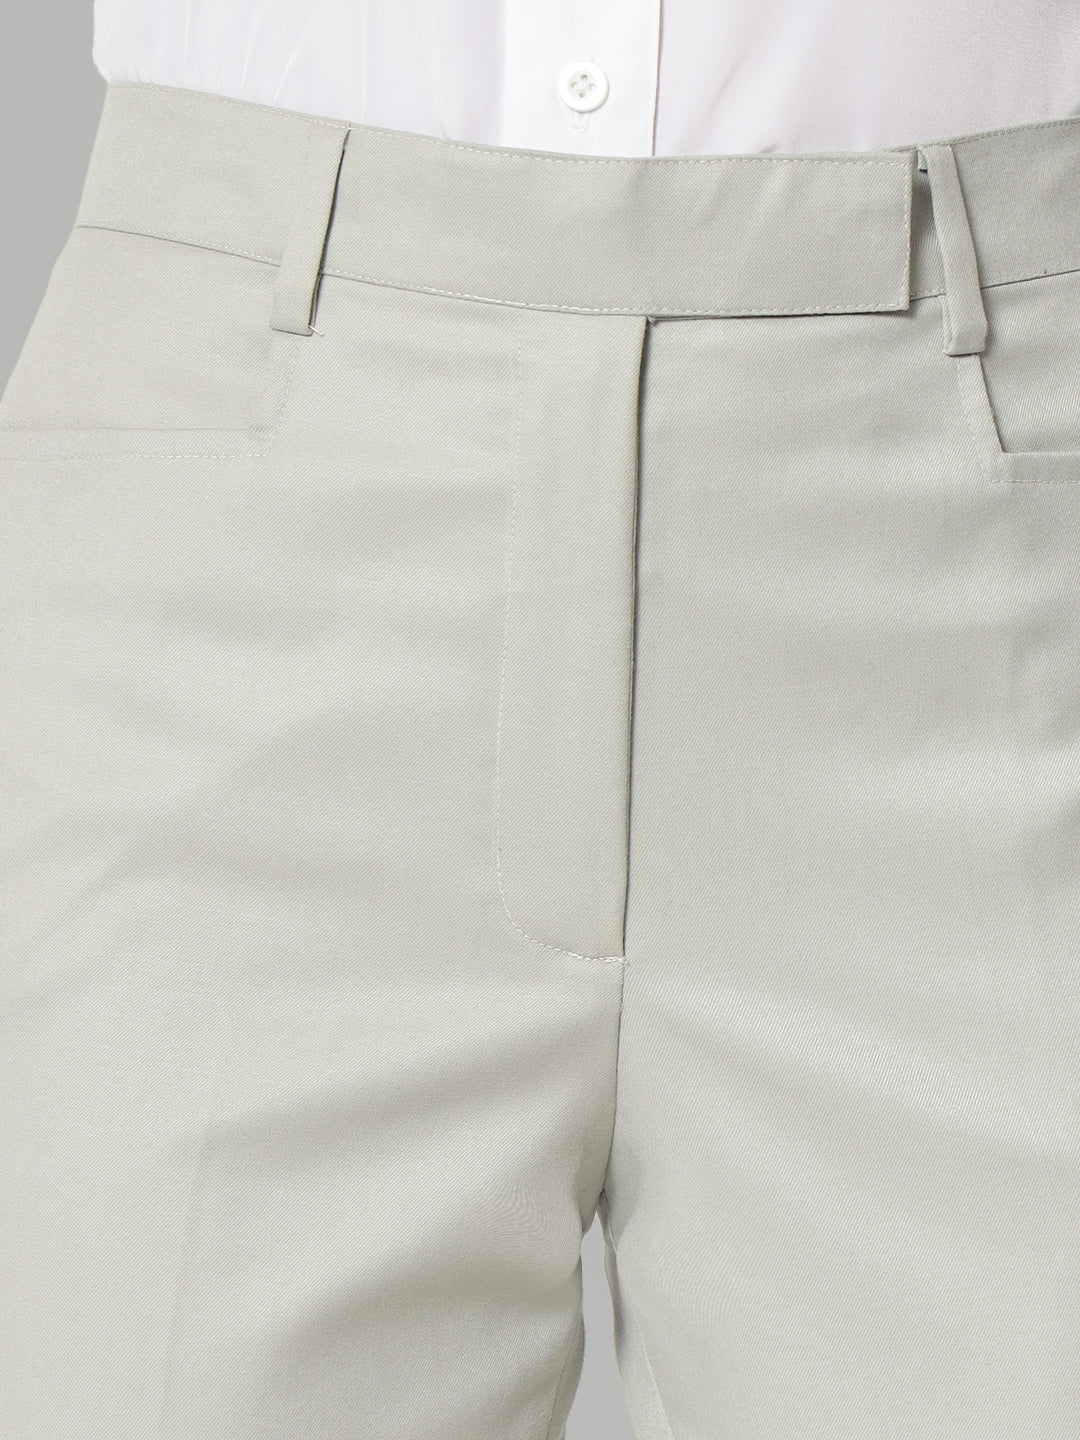 Stromberg Classic Collection Plain Cotton Golf Trouser